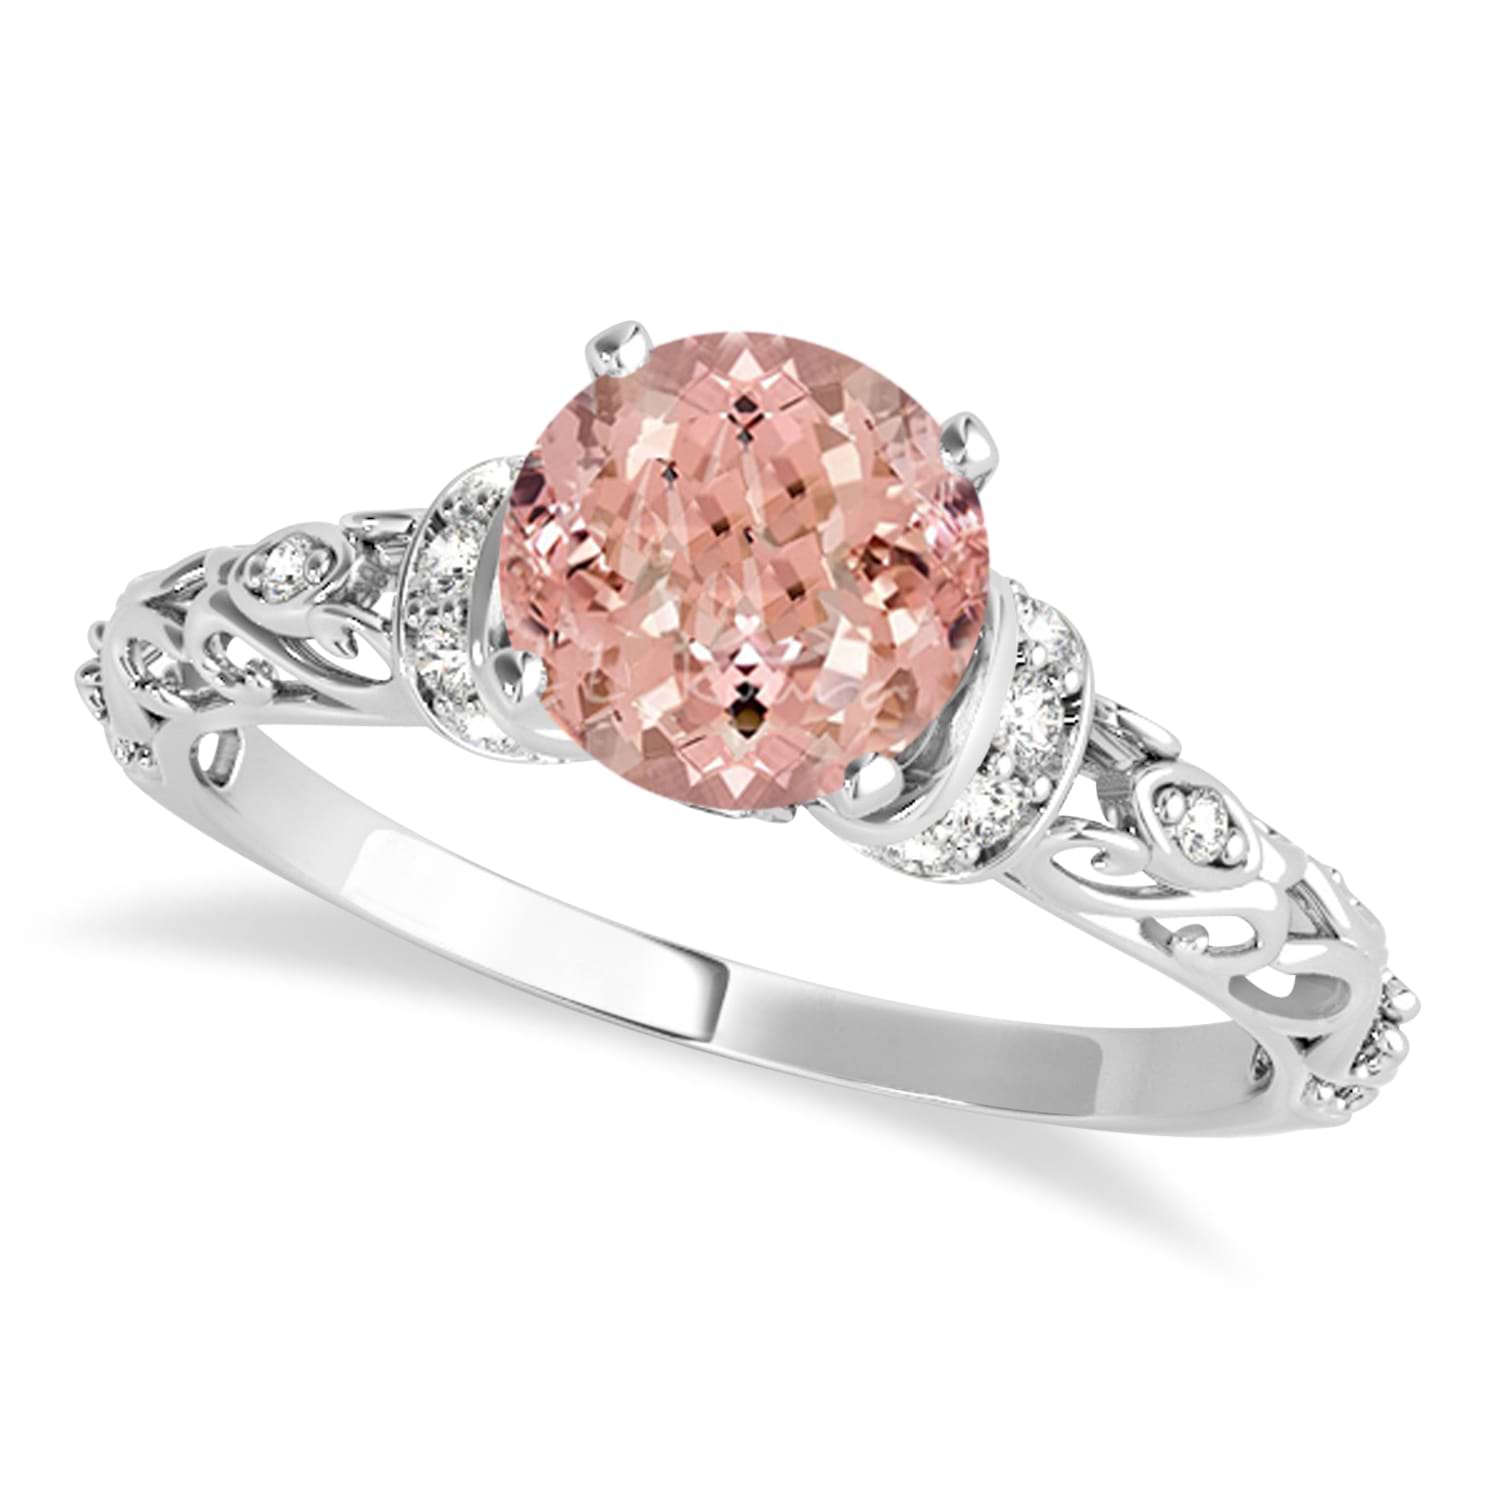 Morganite & Diamond Antique Style Engagement Ring 14k White Gold (0.87ct)